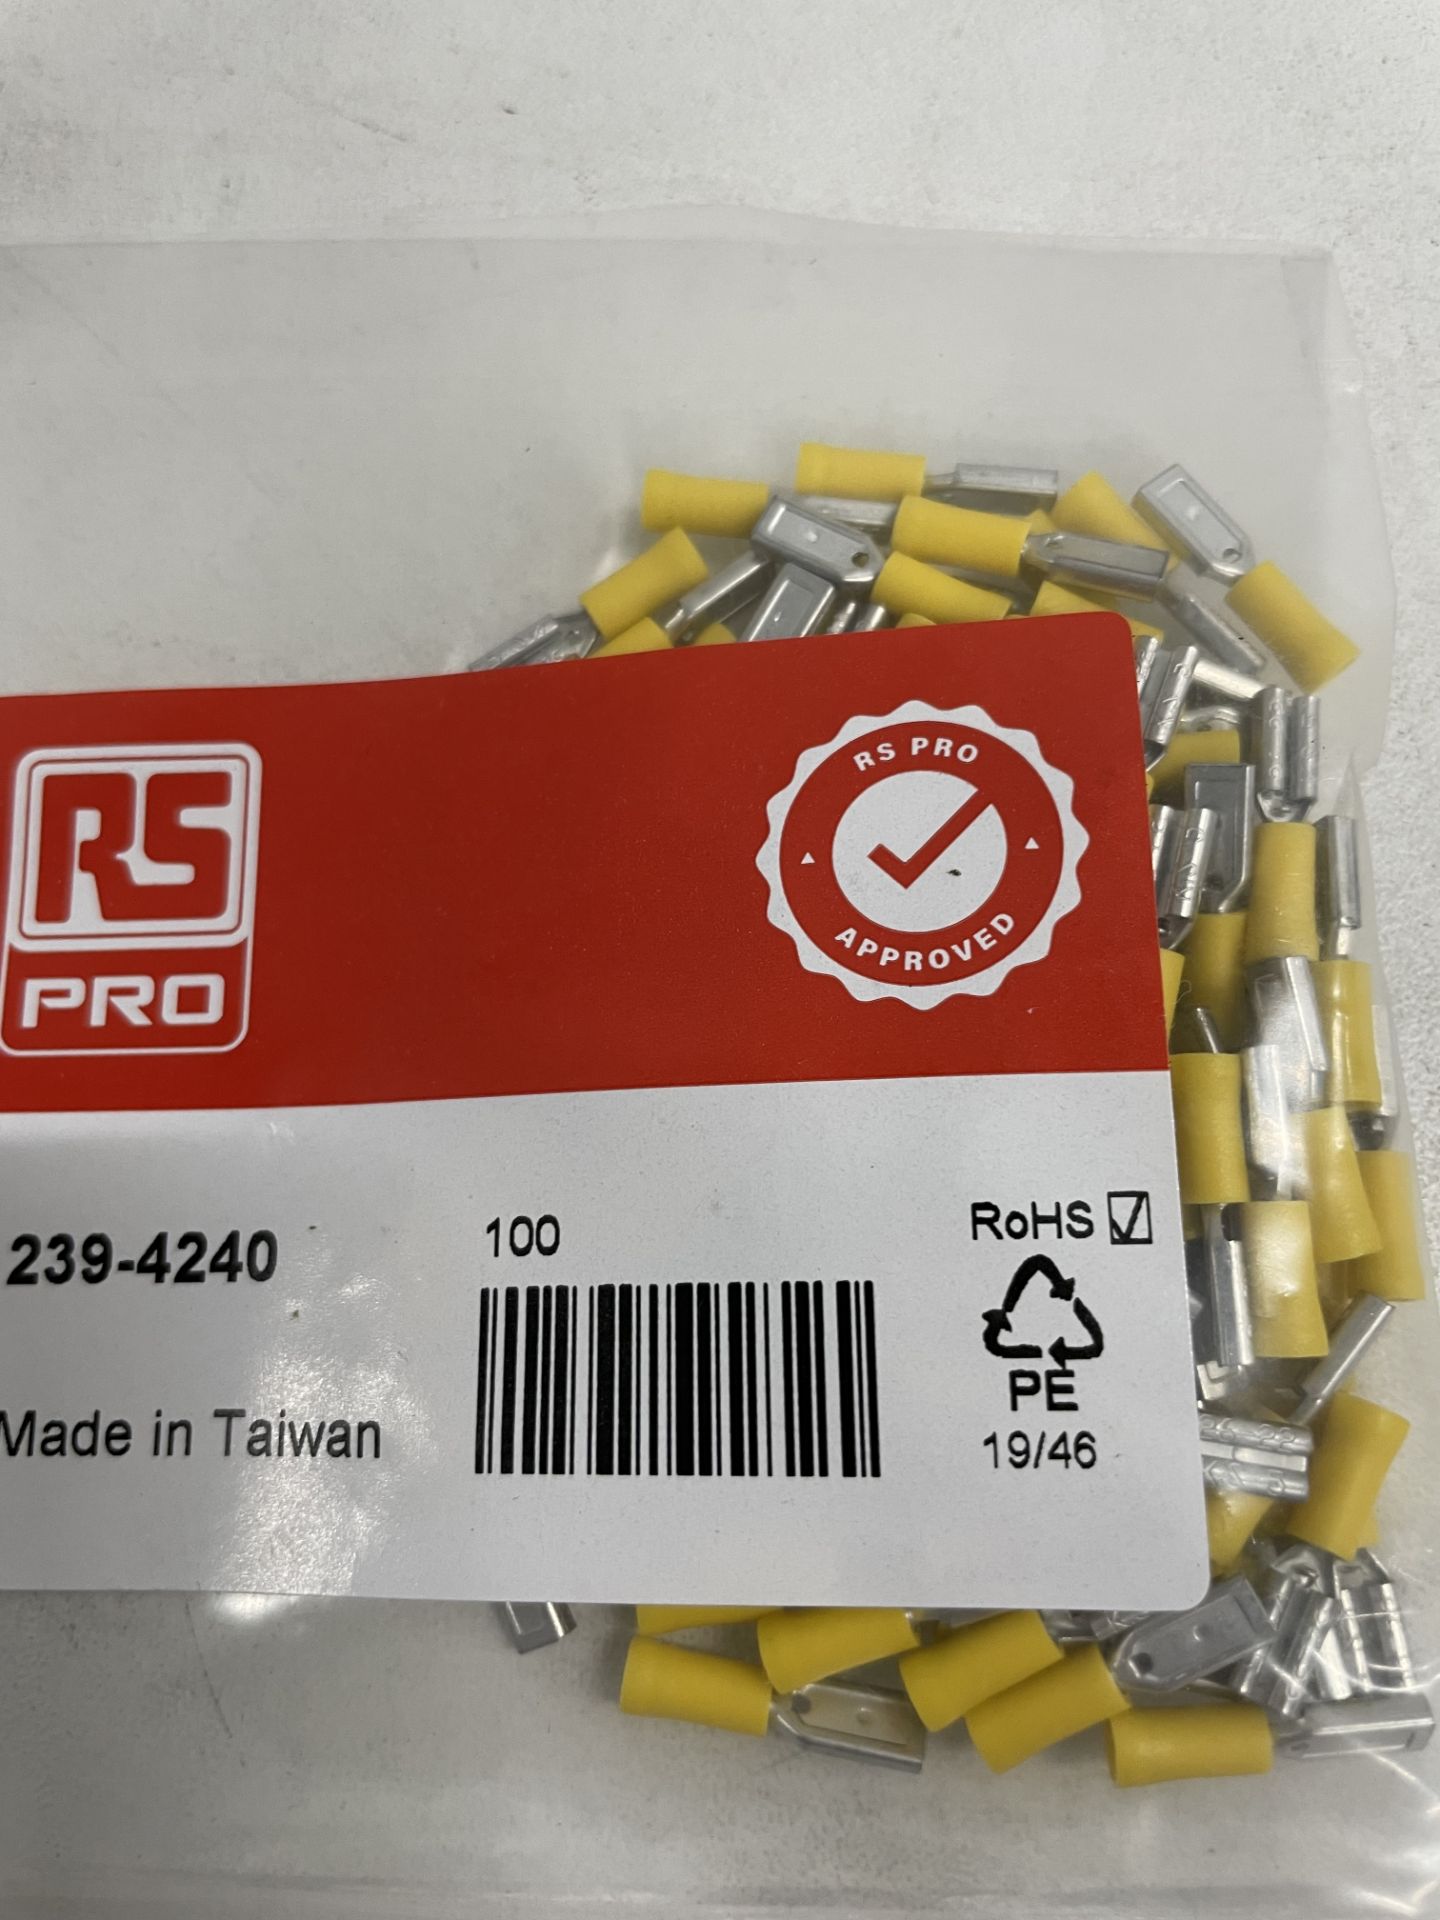 30 x Bags RS-PRO Insulated Spade Connectors | 100 pcs per bag - Image 3 of 3